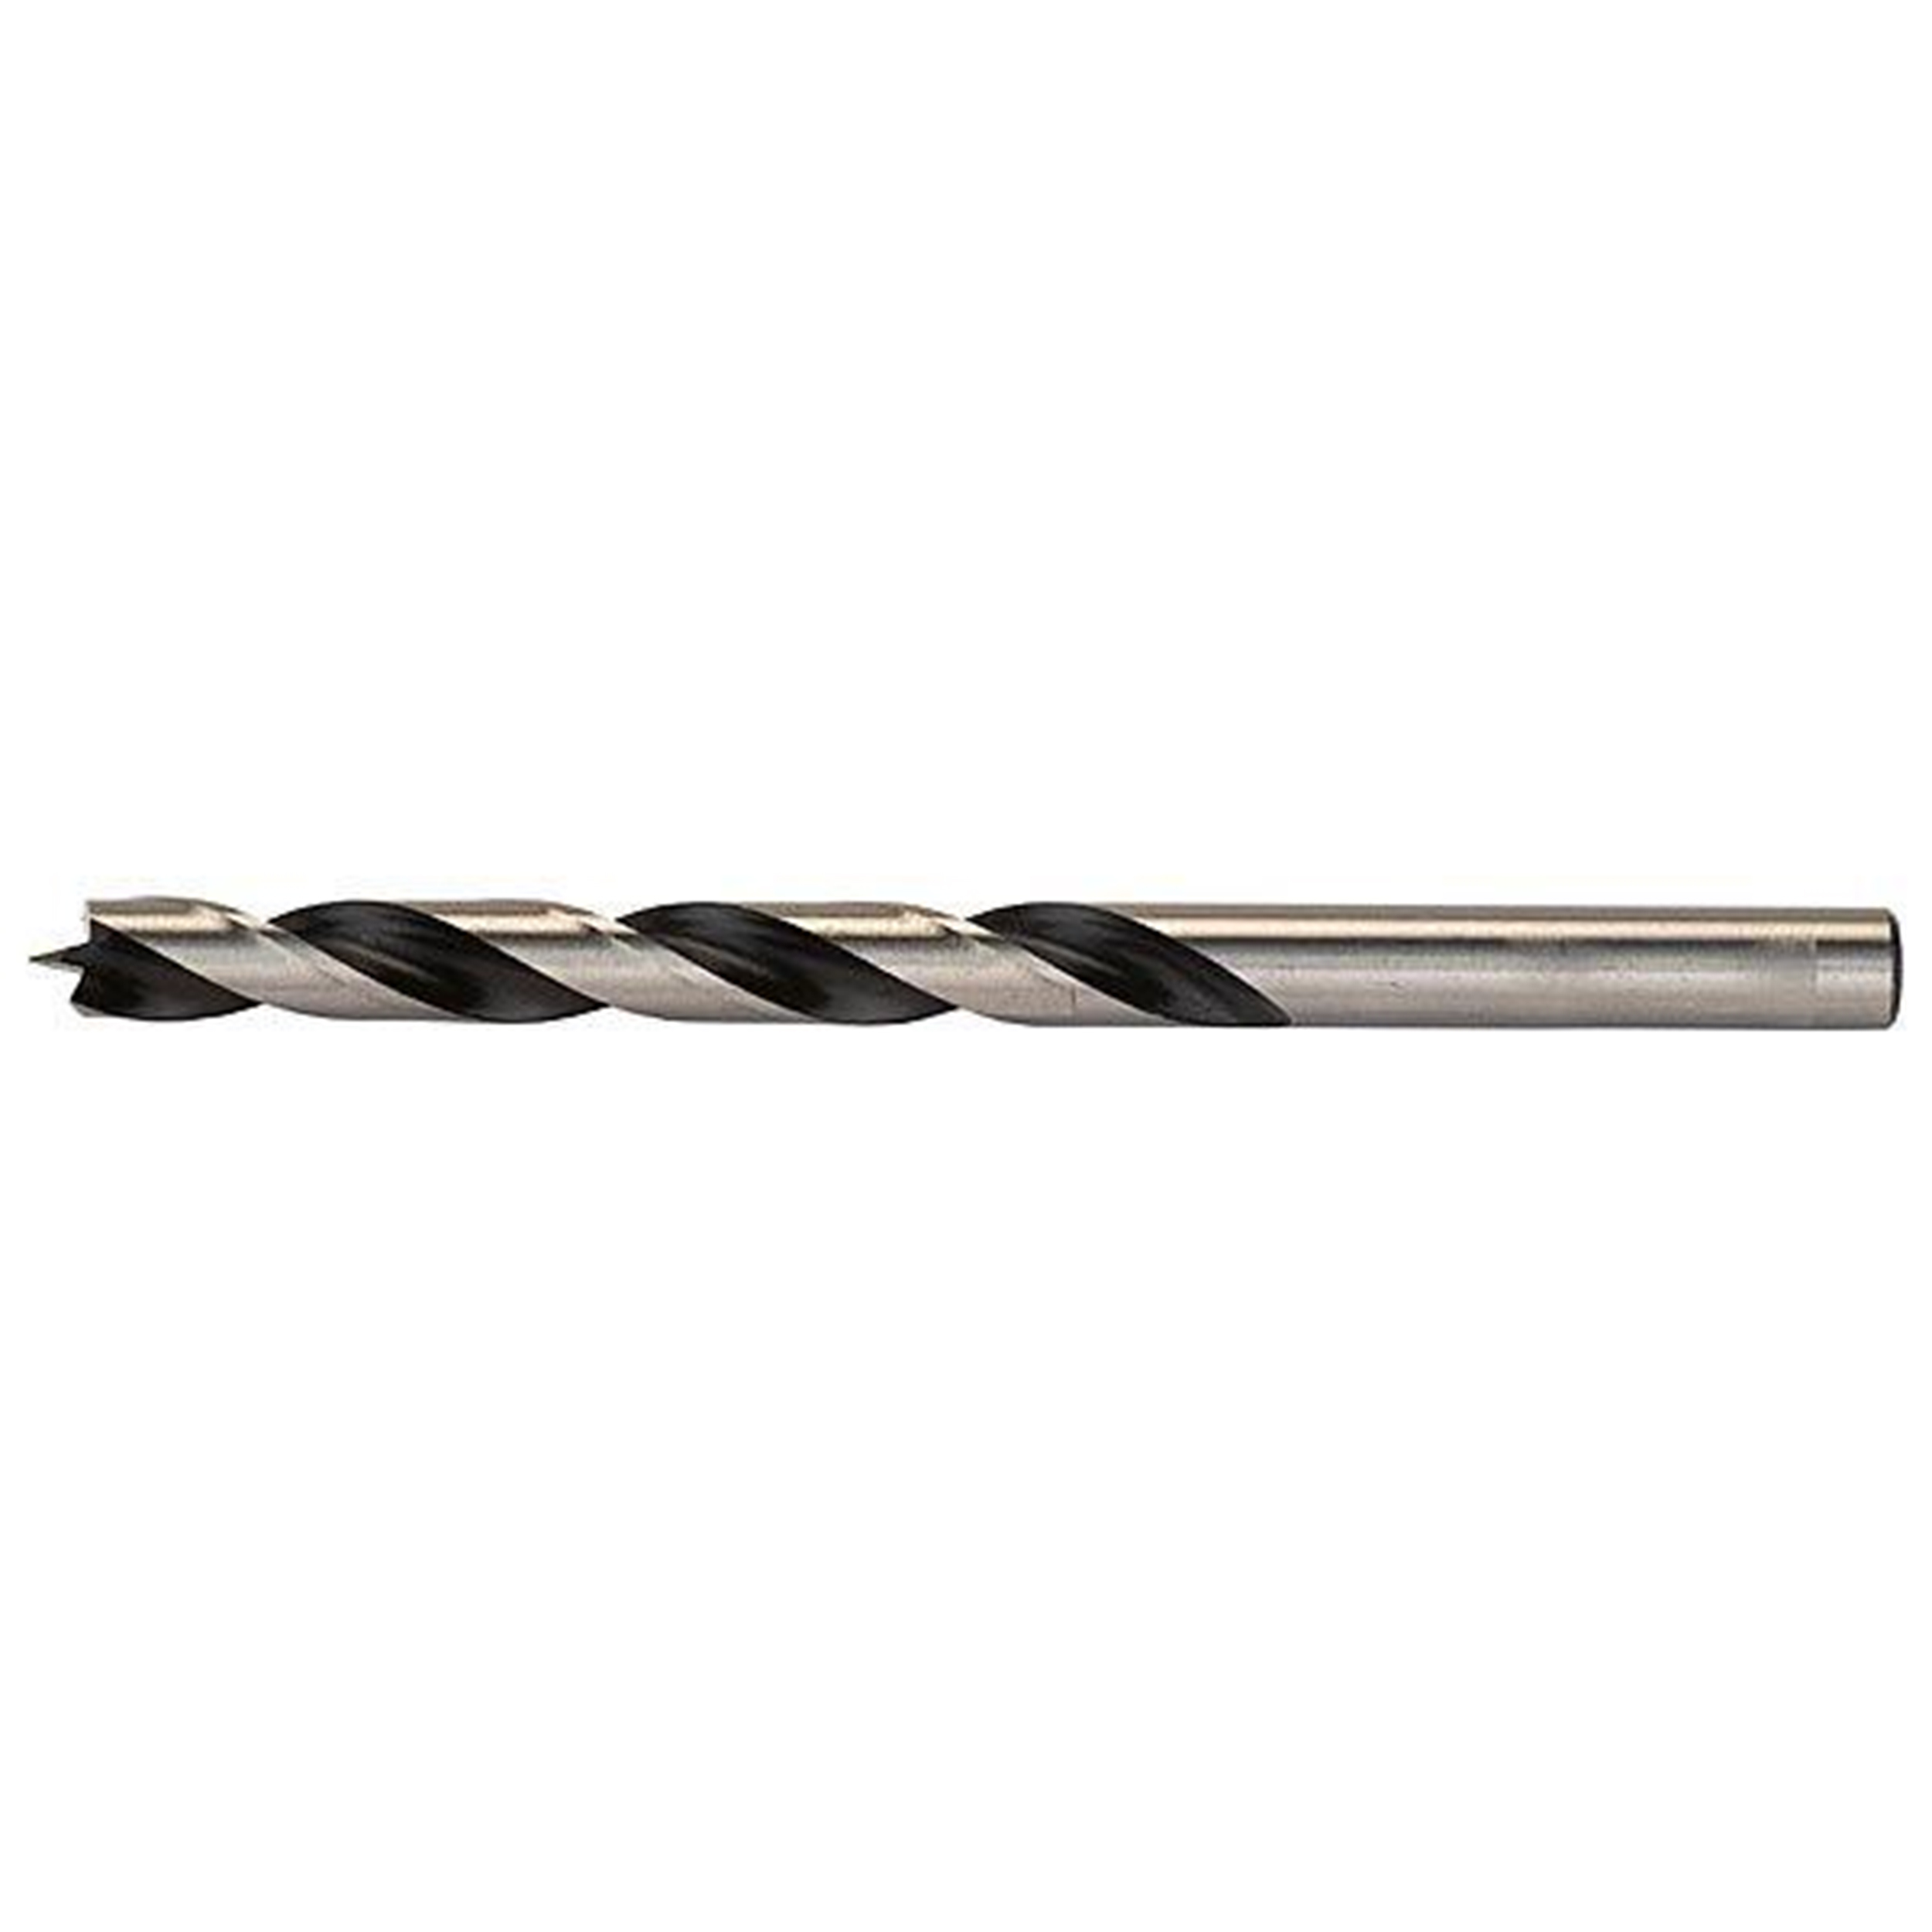 8mm Chrome-vanadium Steel Brad Point Drill Bit